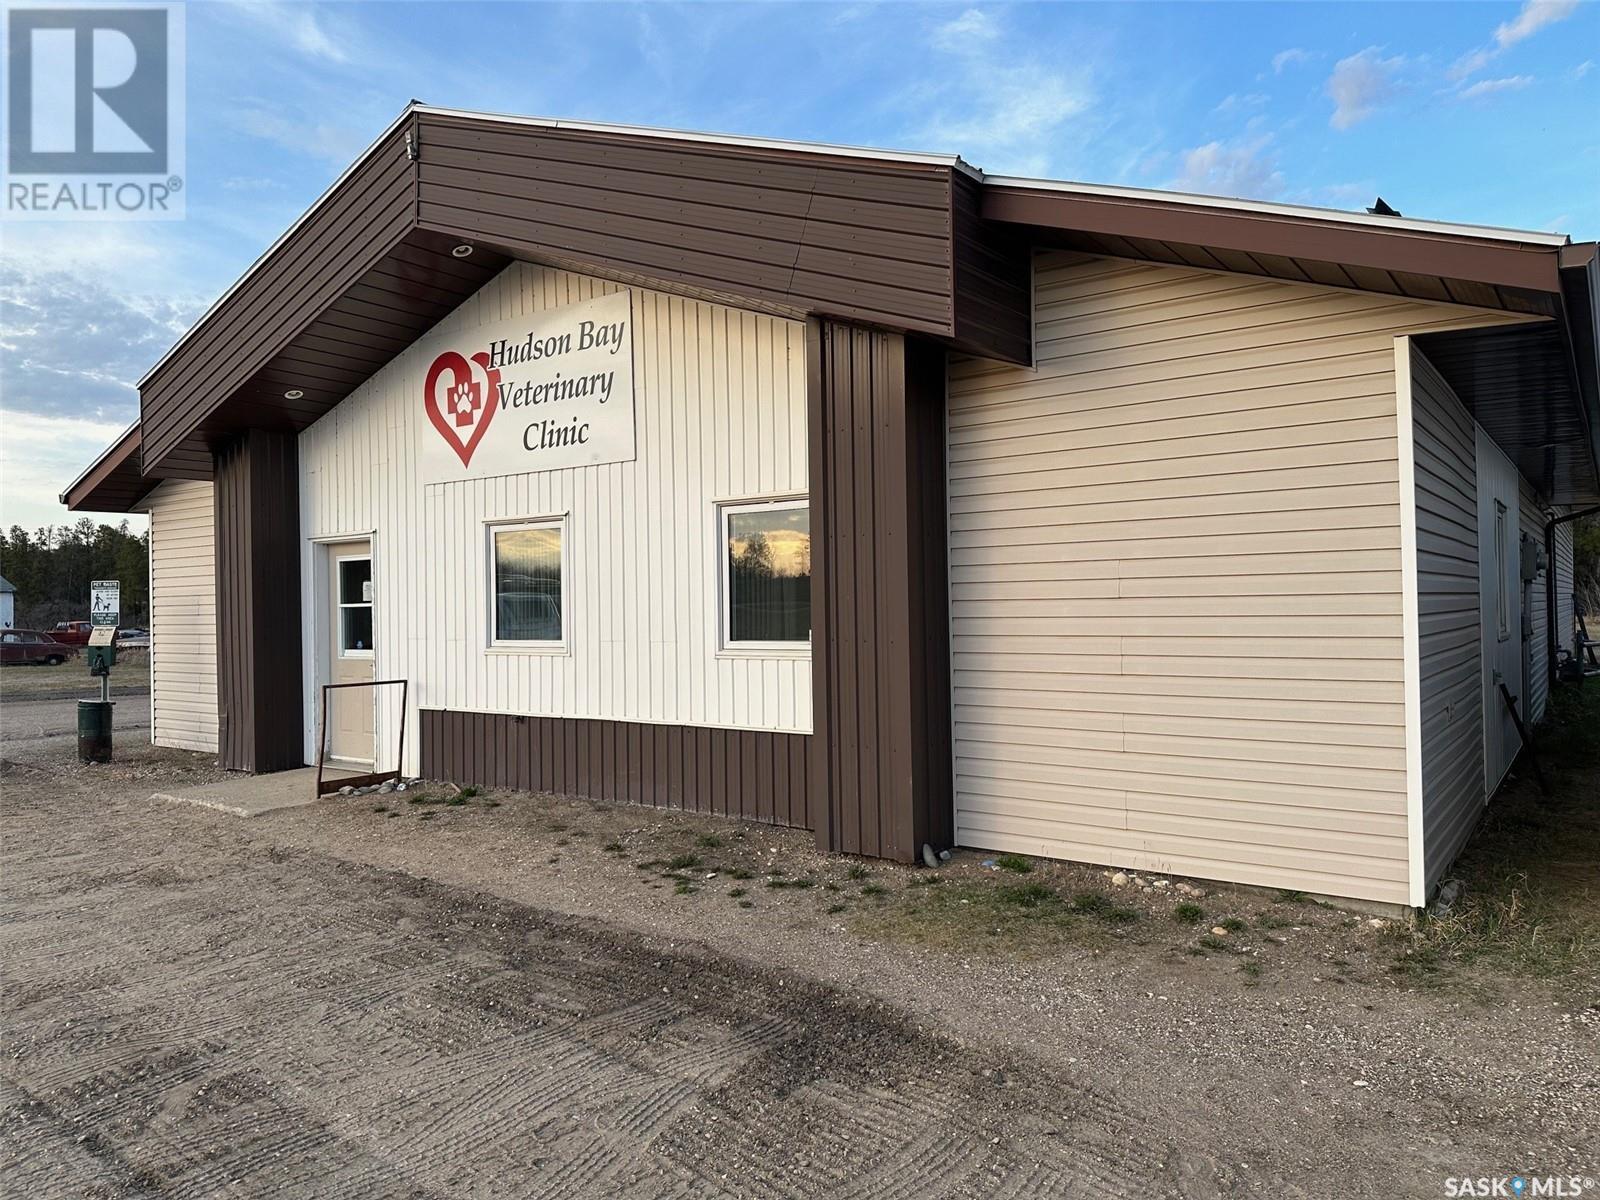 Hudson Bay Veterinary Clinic, hudson bay, Saskatchewan